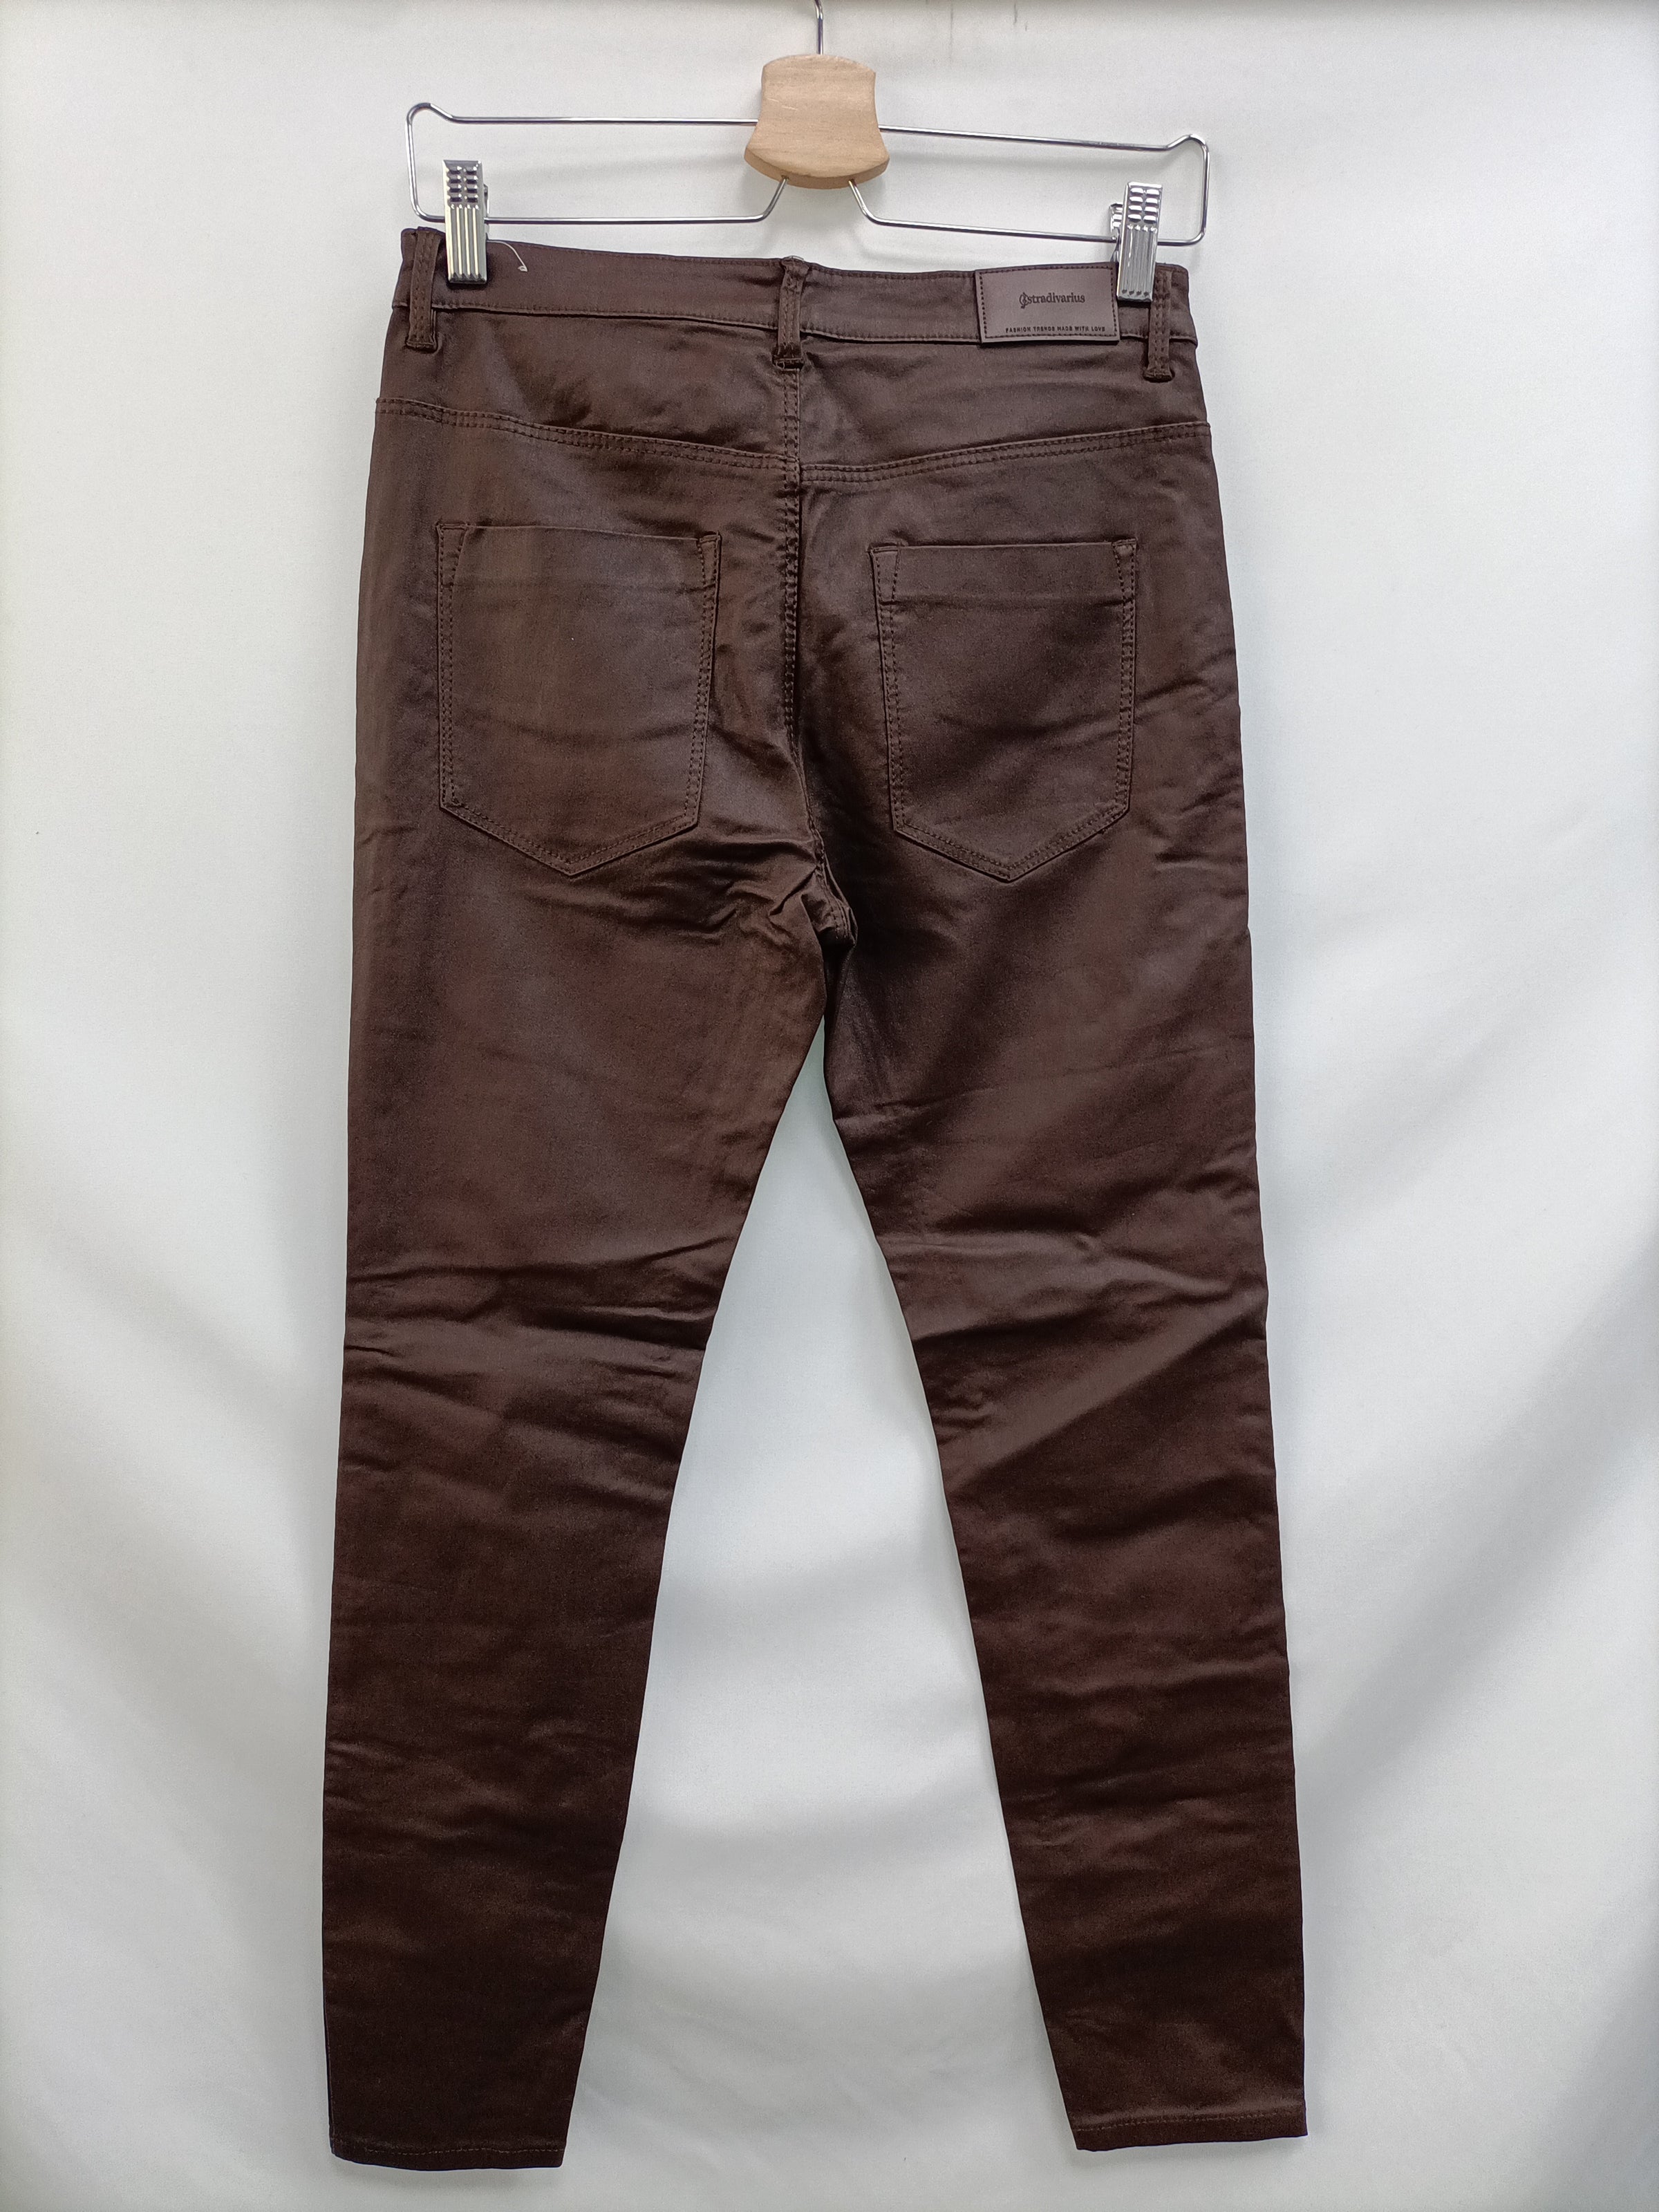 STRADIVARIUS. Pantalón encerado marrón T.40 market